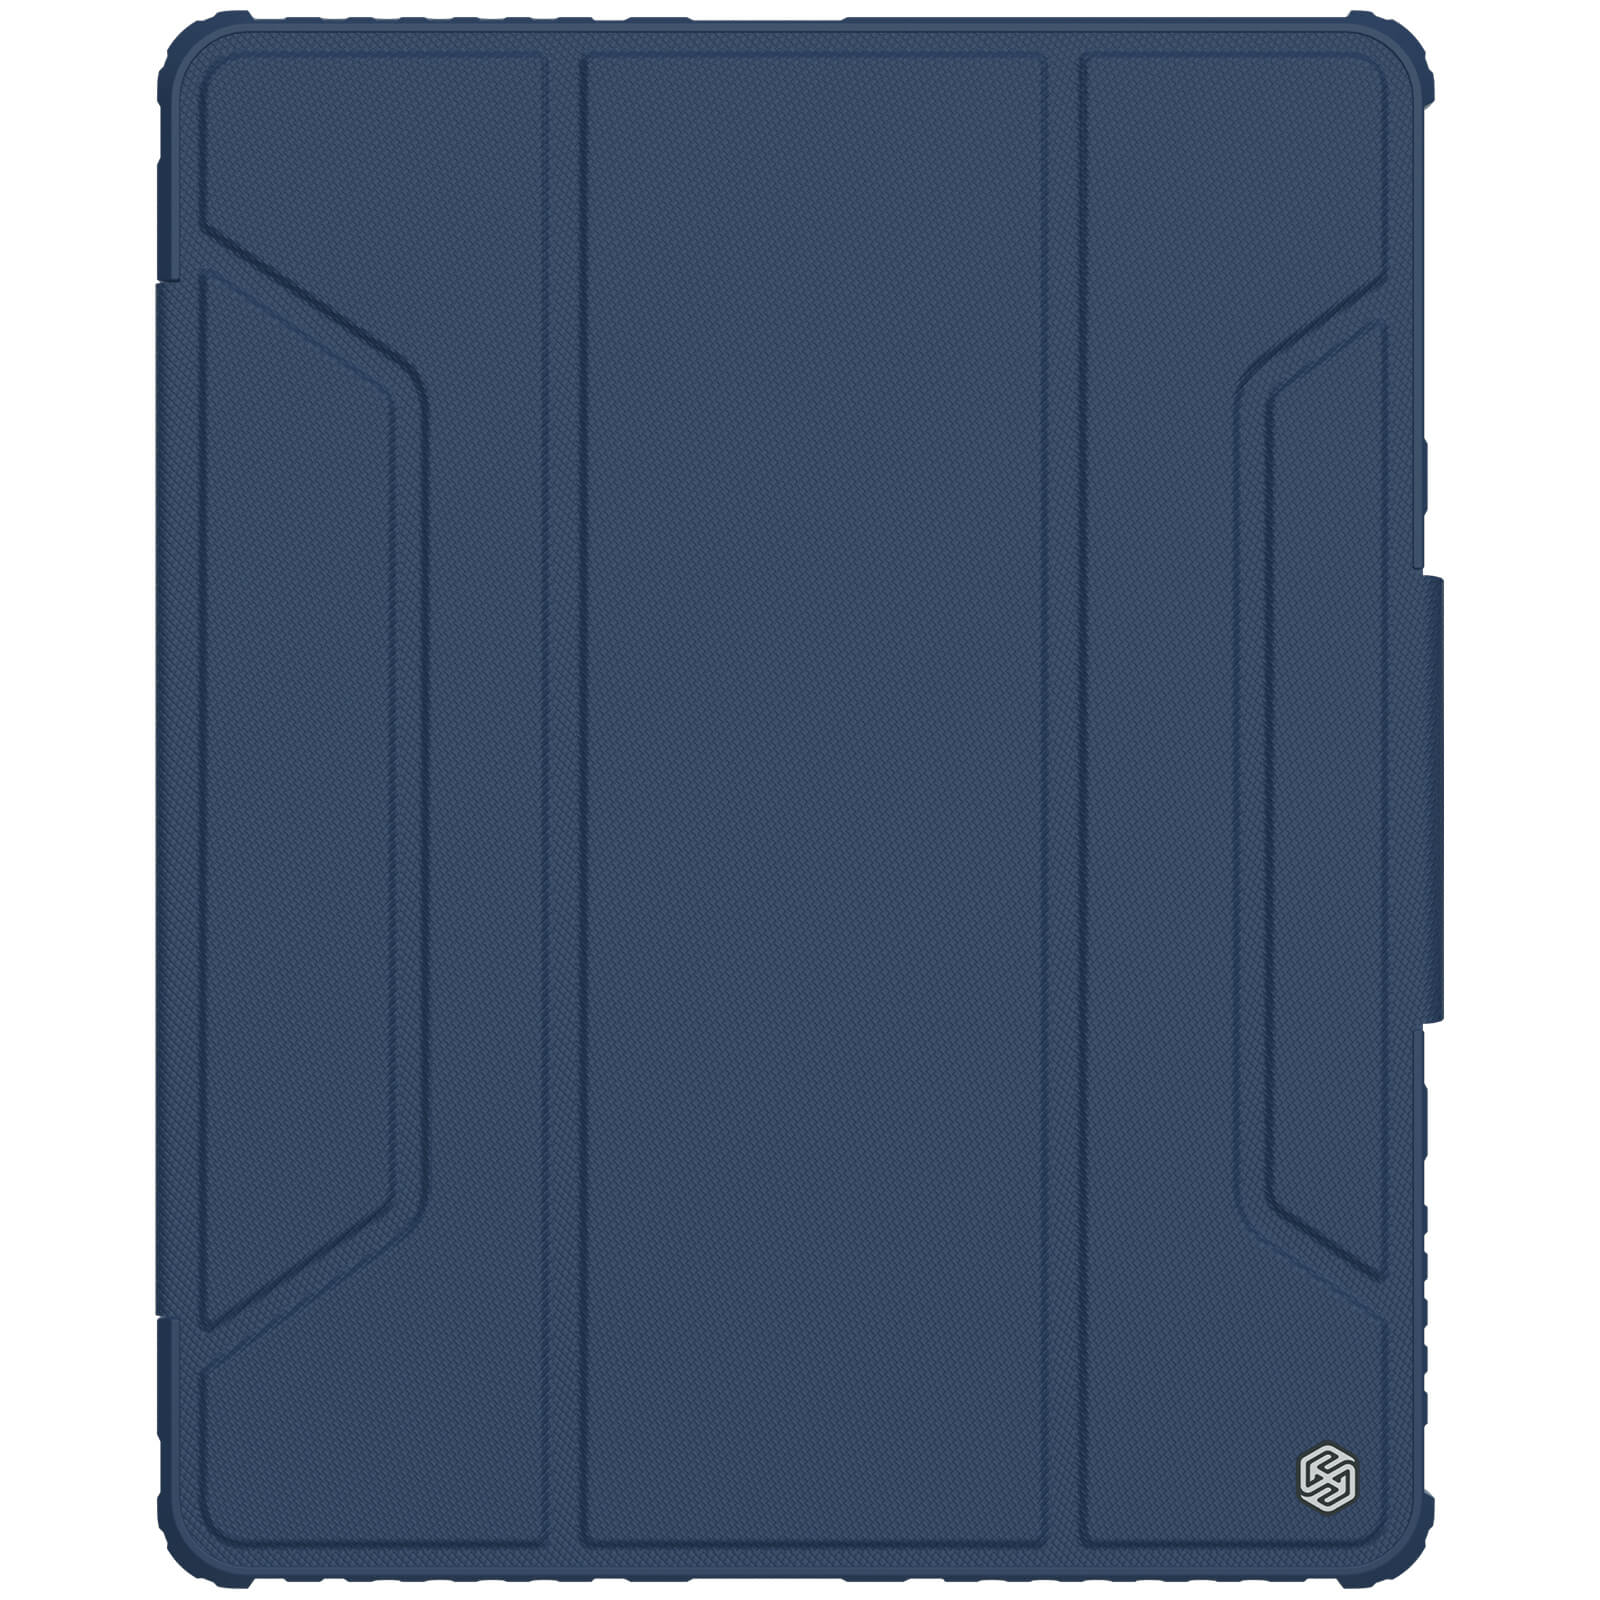 Fierce Armor rugged case for iPad Pro 11”/12.9" 2021 2020_positive side_navy blue